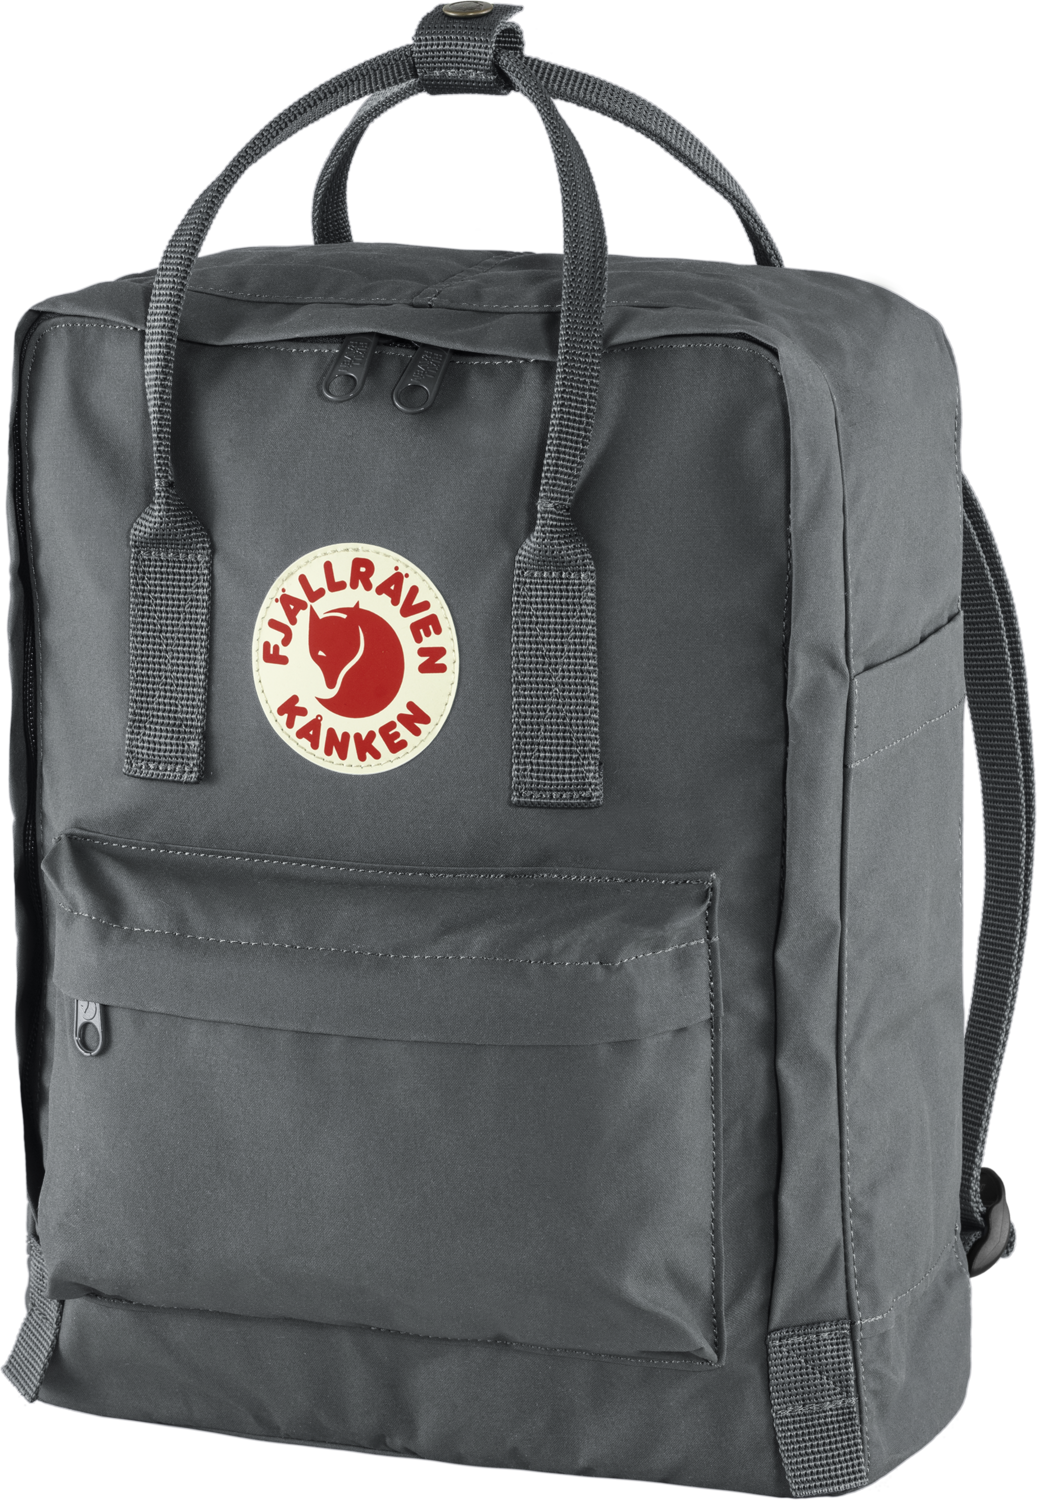 Gray Kanken backpack india